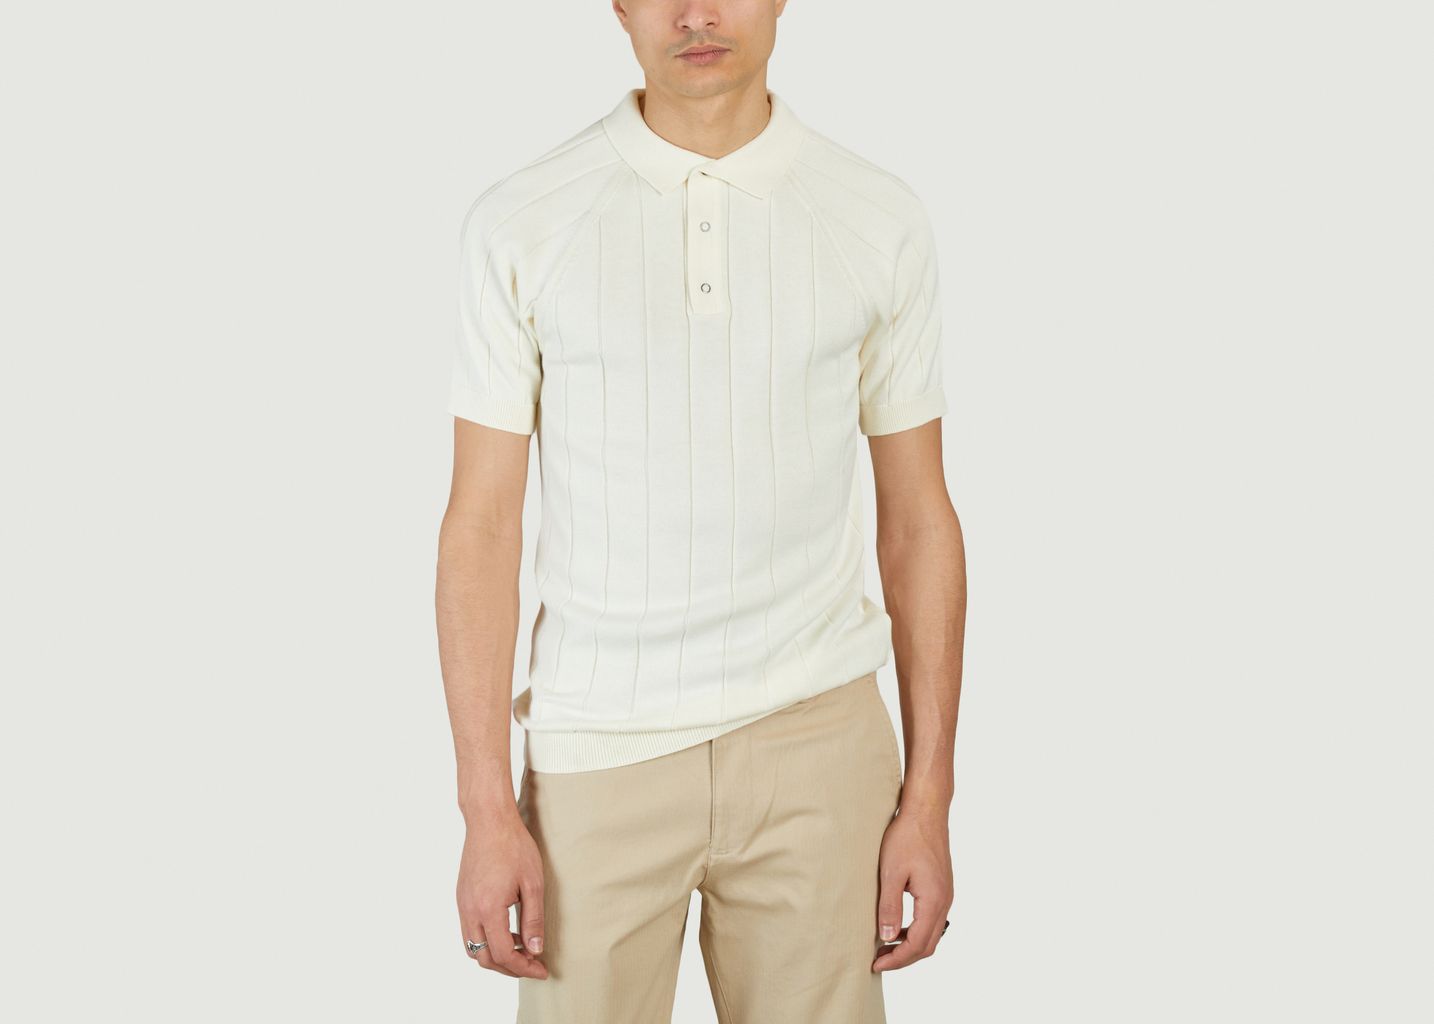 Regular short-sleeved striped knit polo shirt - KCA